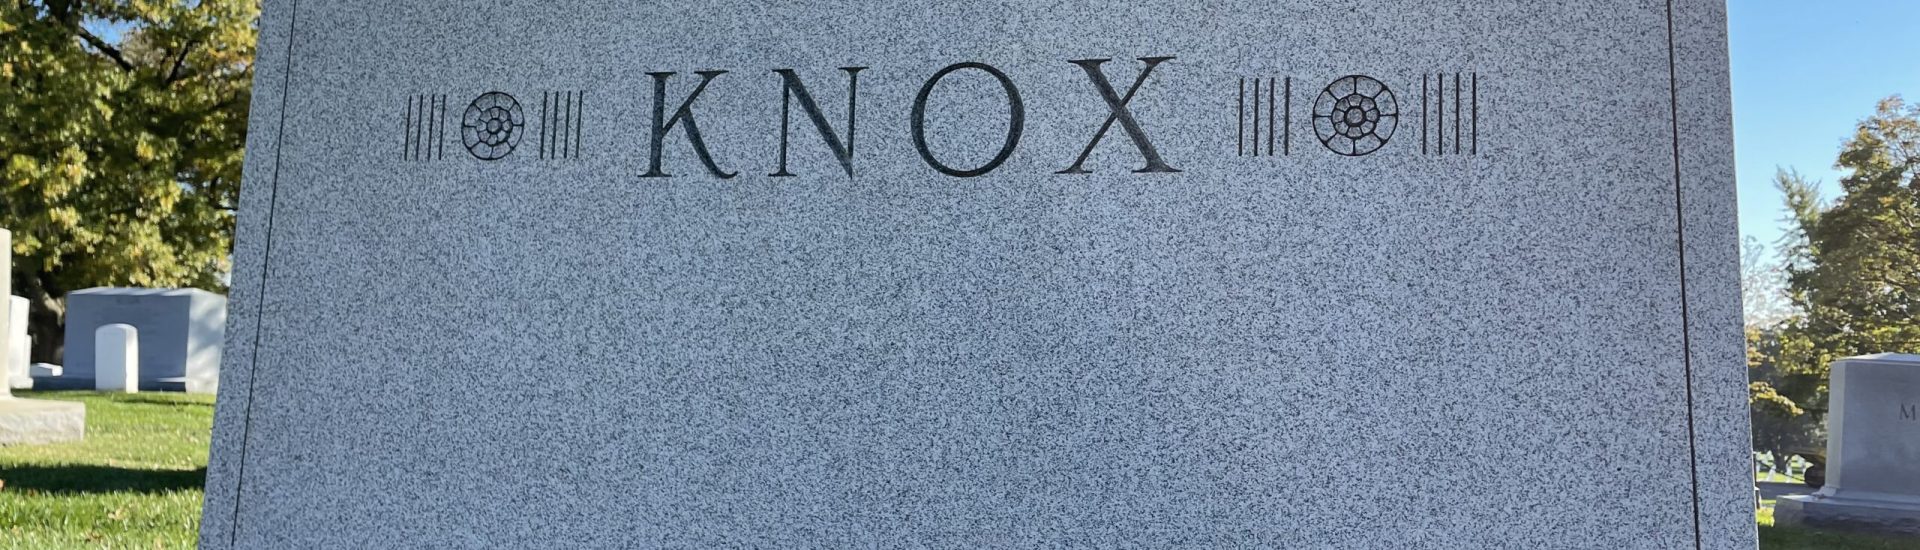 Frank Knox